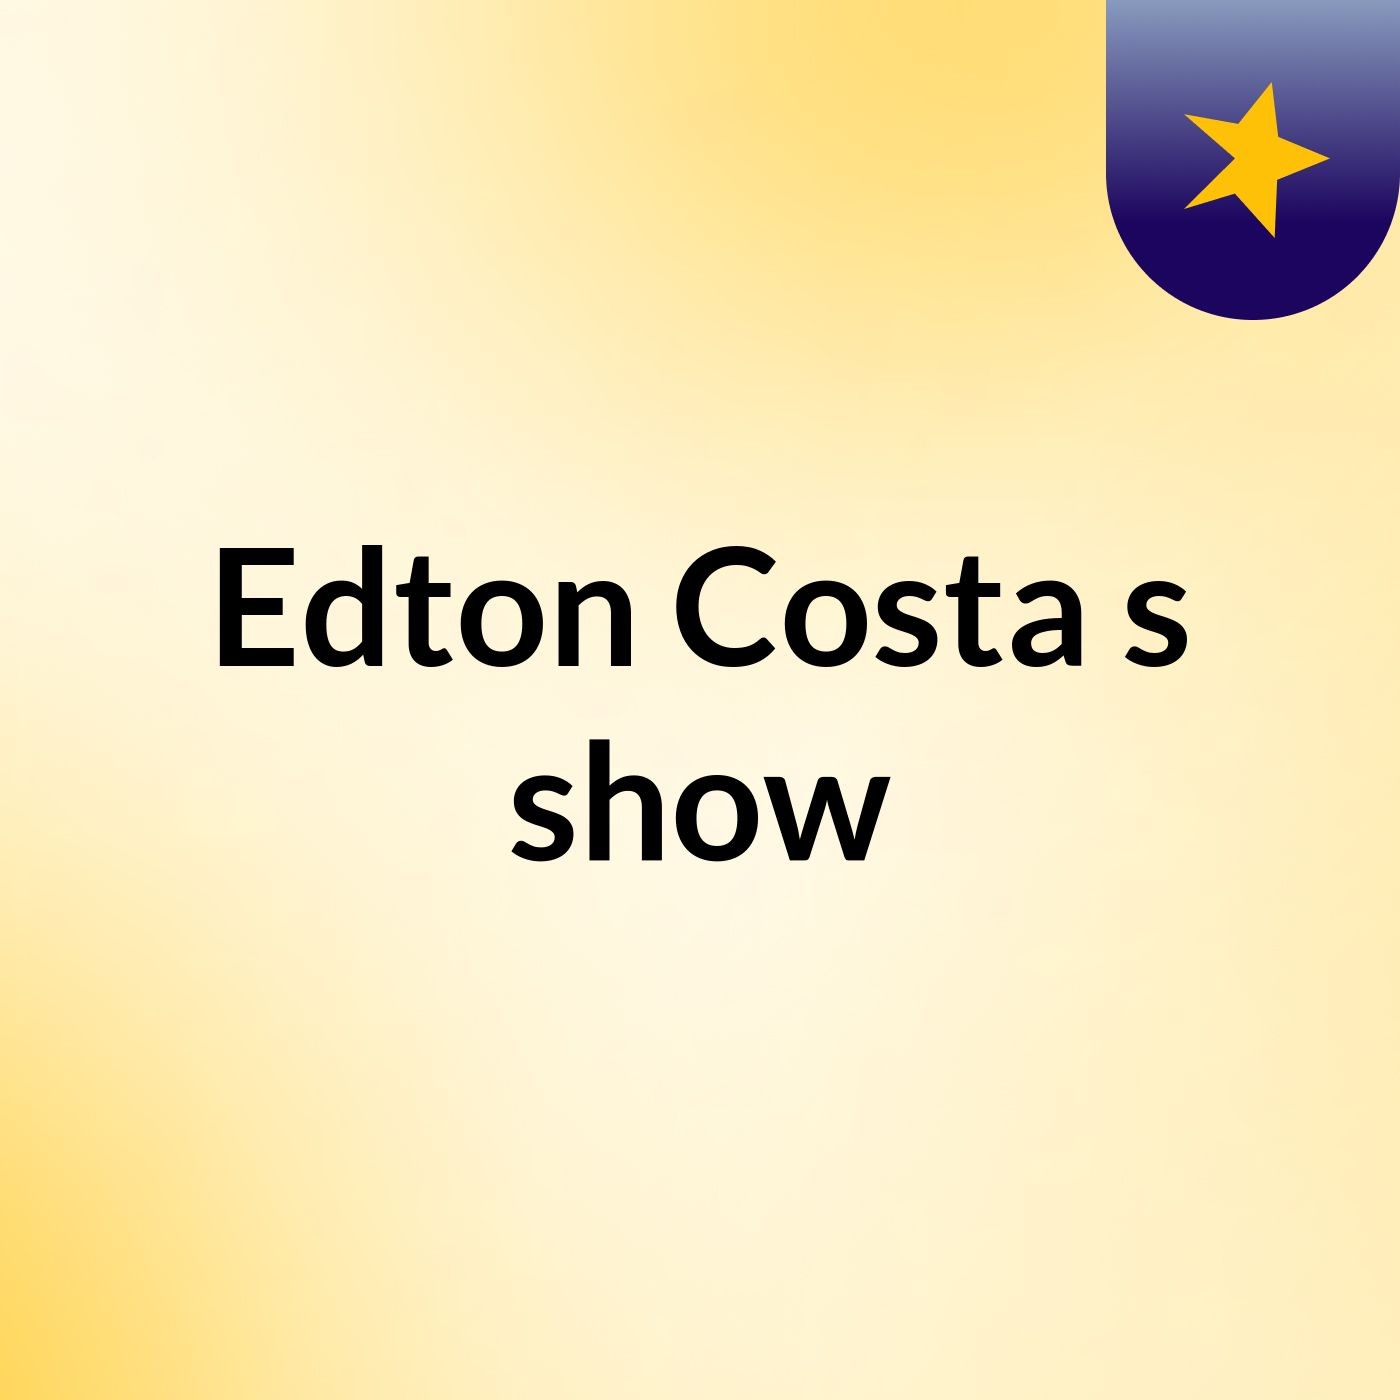 Edton Costa's show